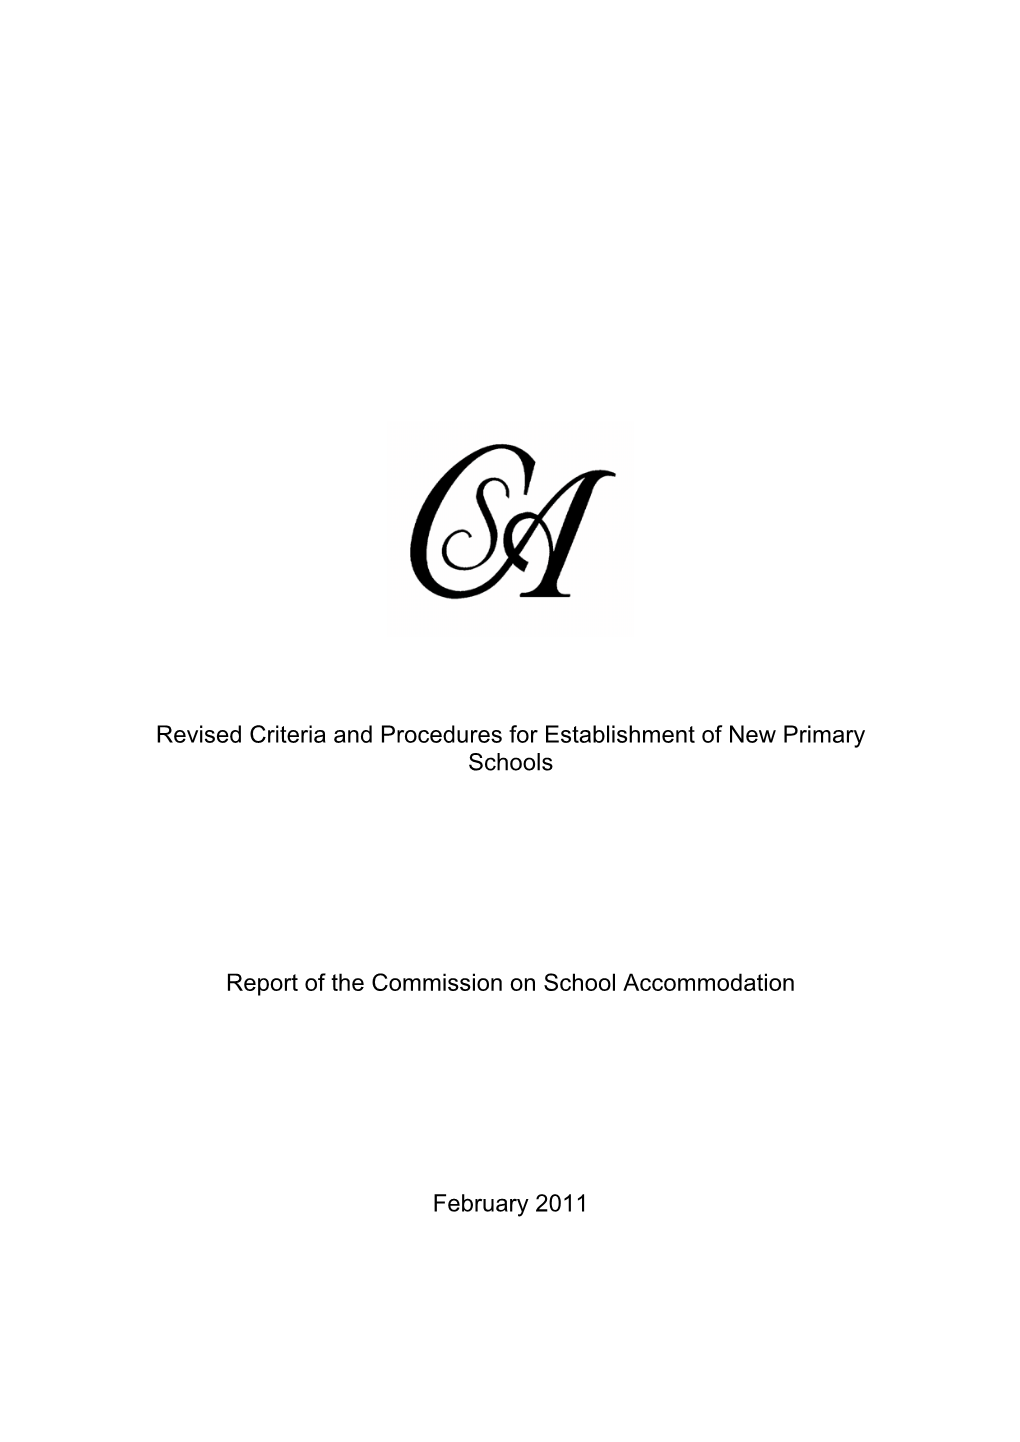 Revised Criteria and Procedures for Establishment of New Primary Schools